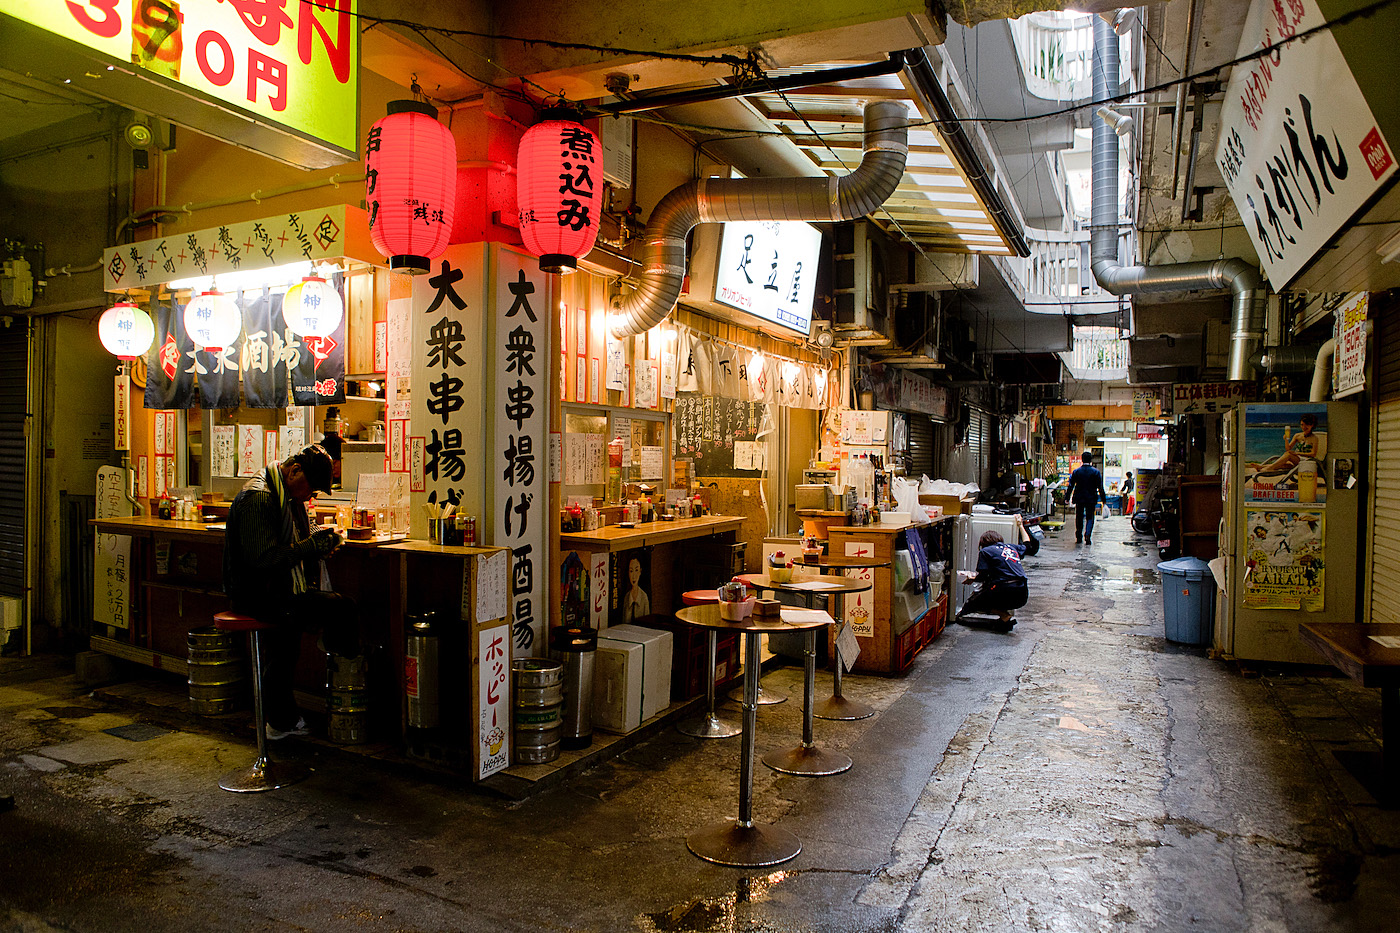 The golden bun - naha market naha, okinawa market, makishi market, naha city okinawa - okinawa fish market guide